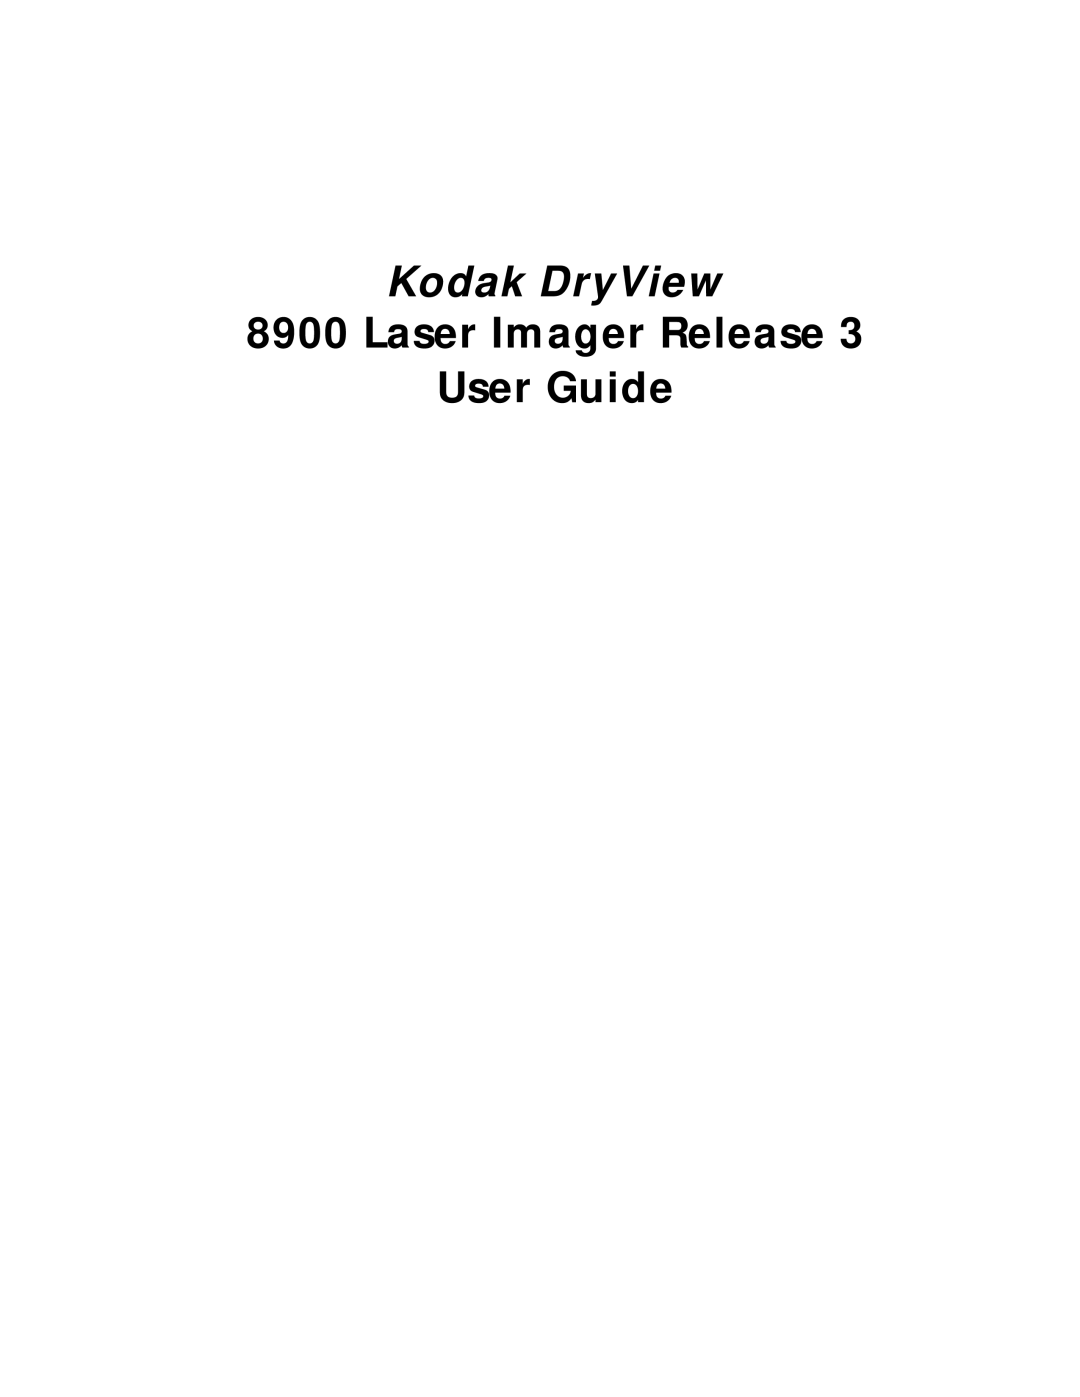 Kodak DryView 8900 manual Kodak DryView 